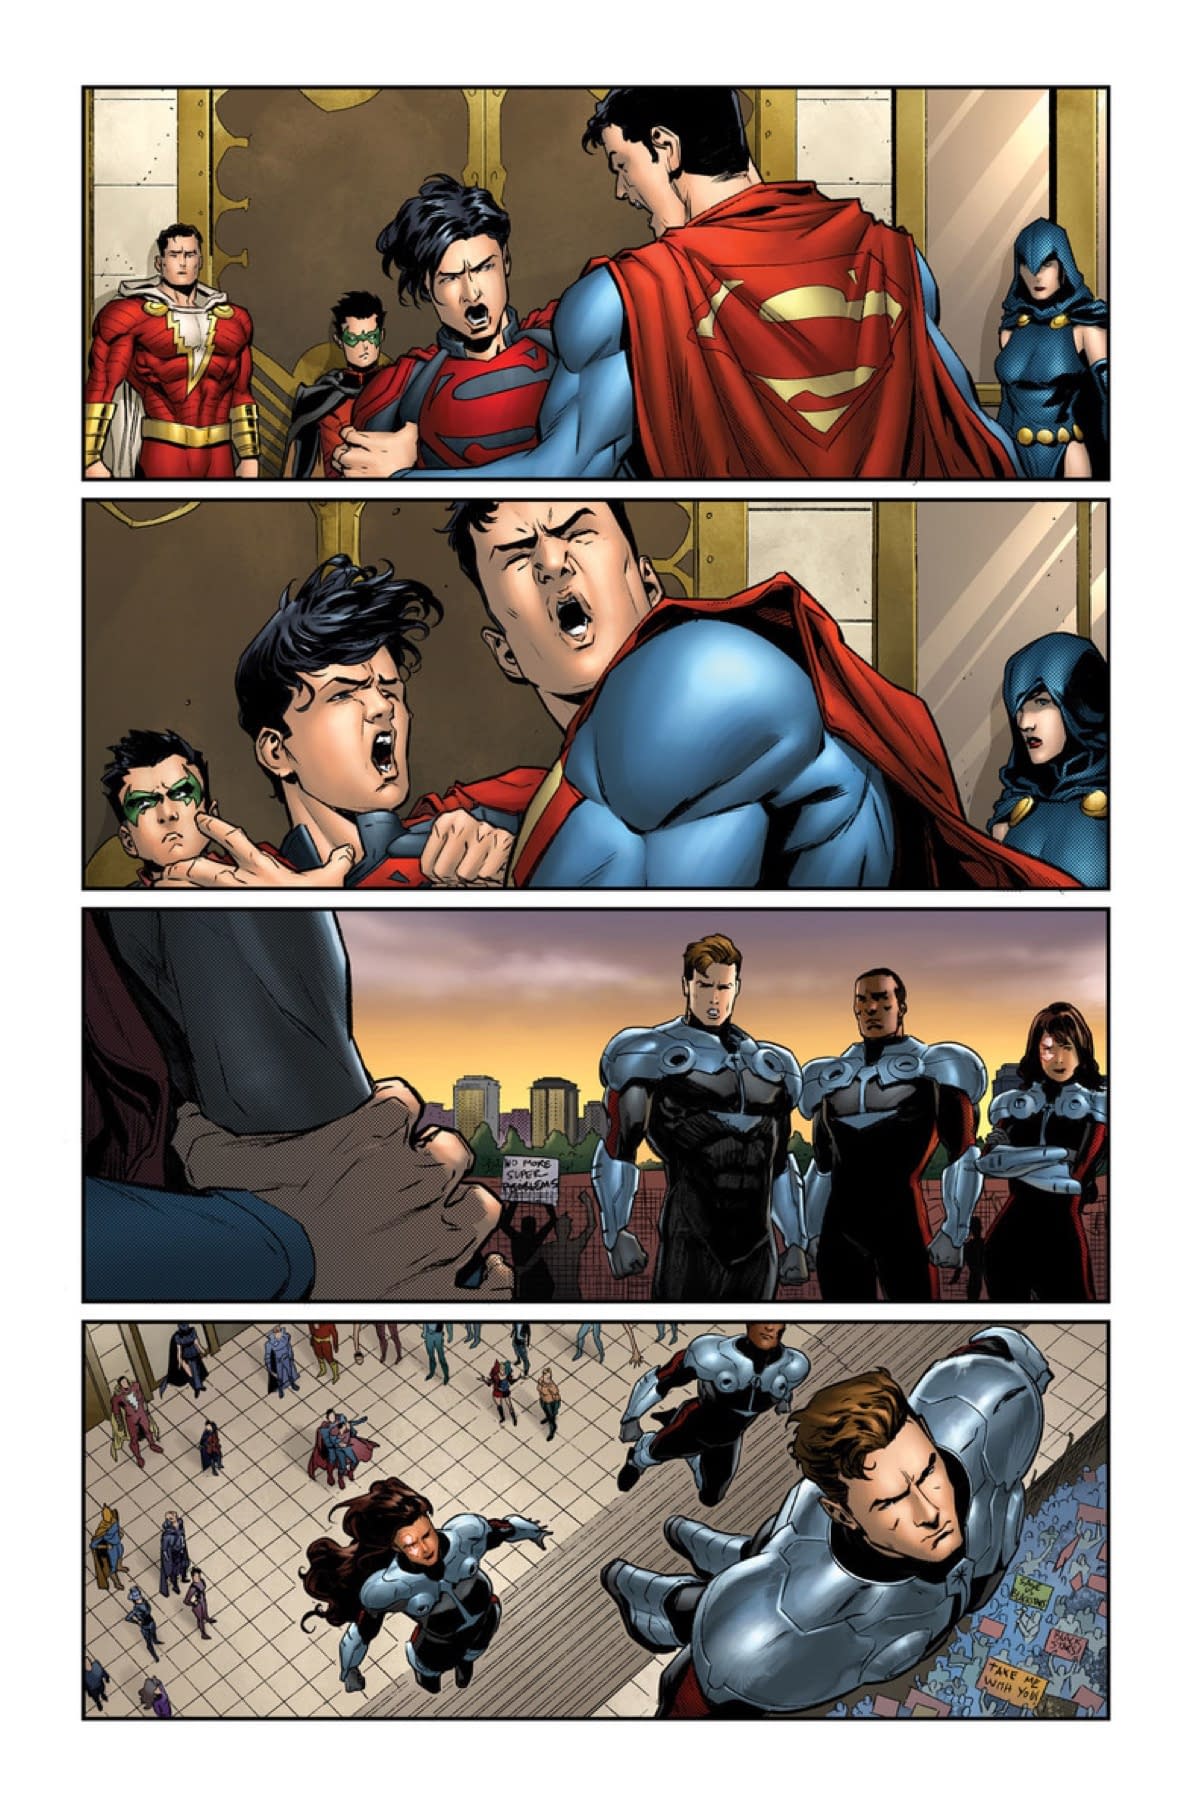 Blackstars #2 Will Feature The Cruelest Portrayal of Superman Grant Morrison Has Ever Done